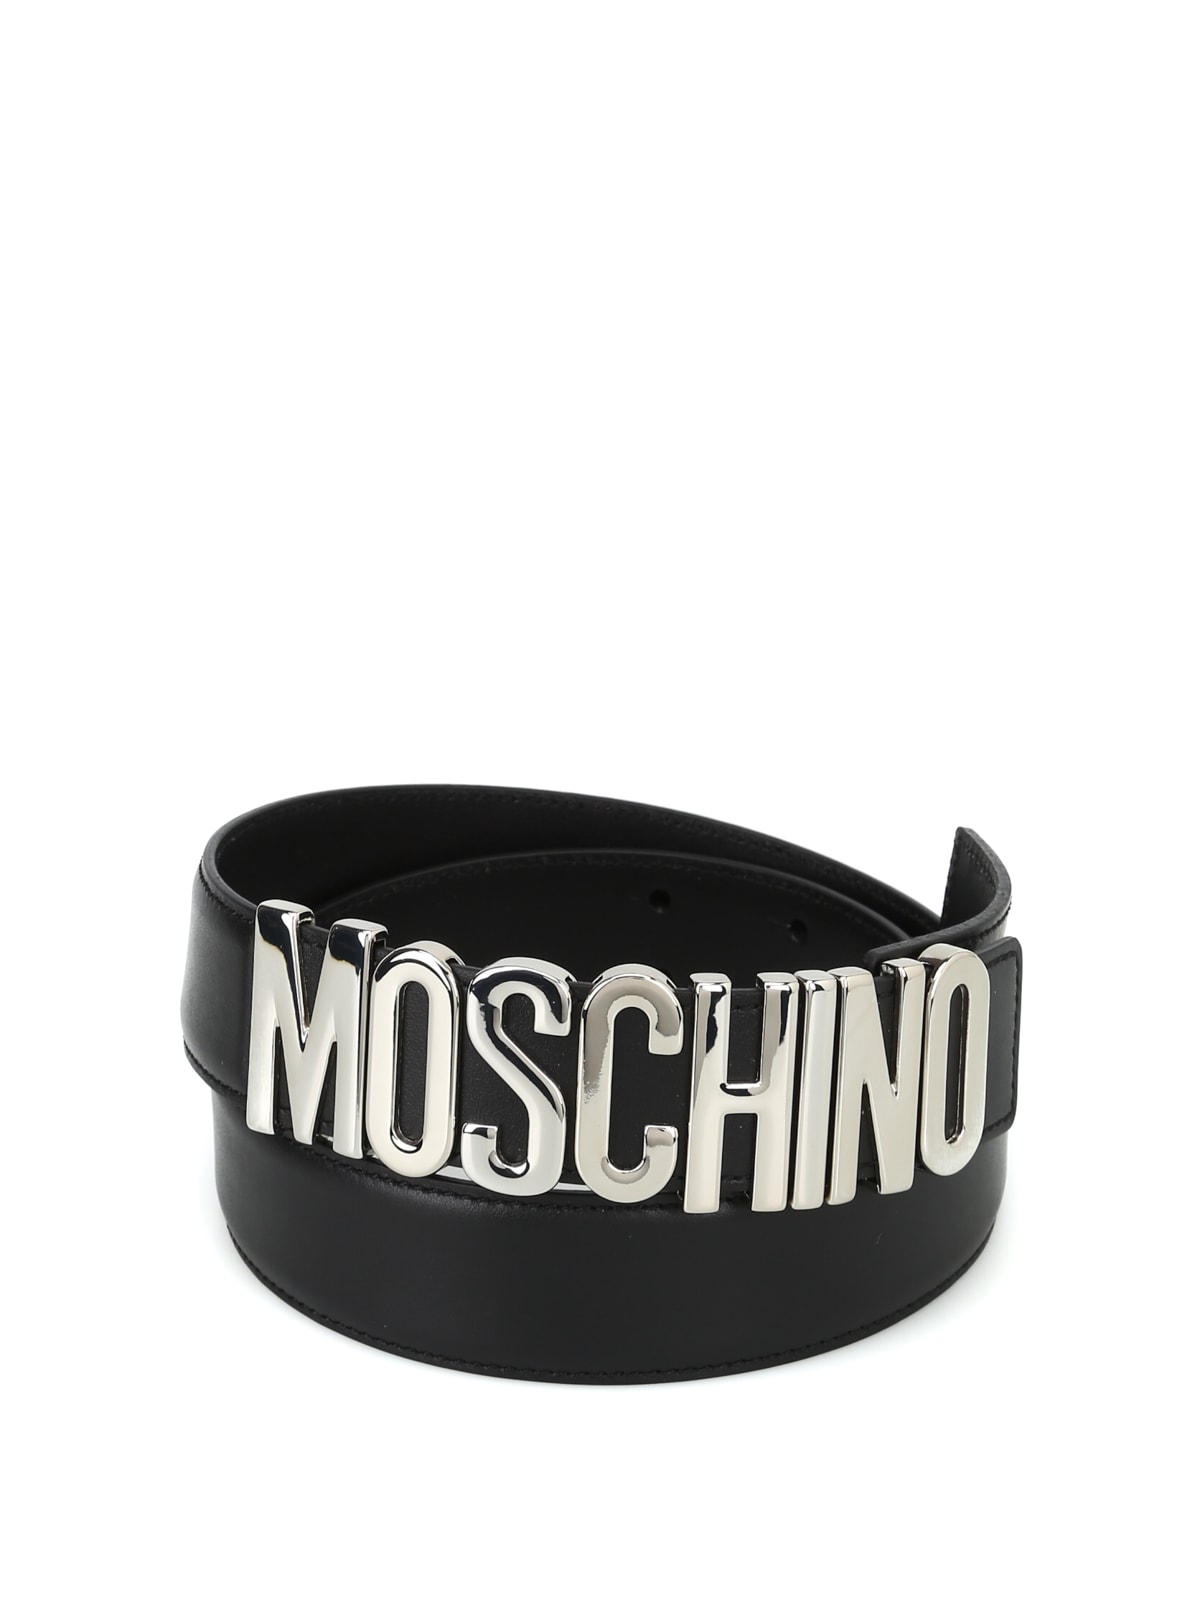 Moschino Belts | italist, ALWAYS LIKE A SALE